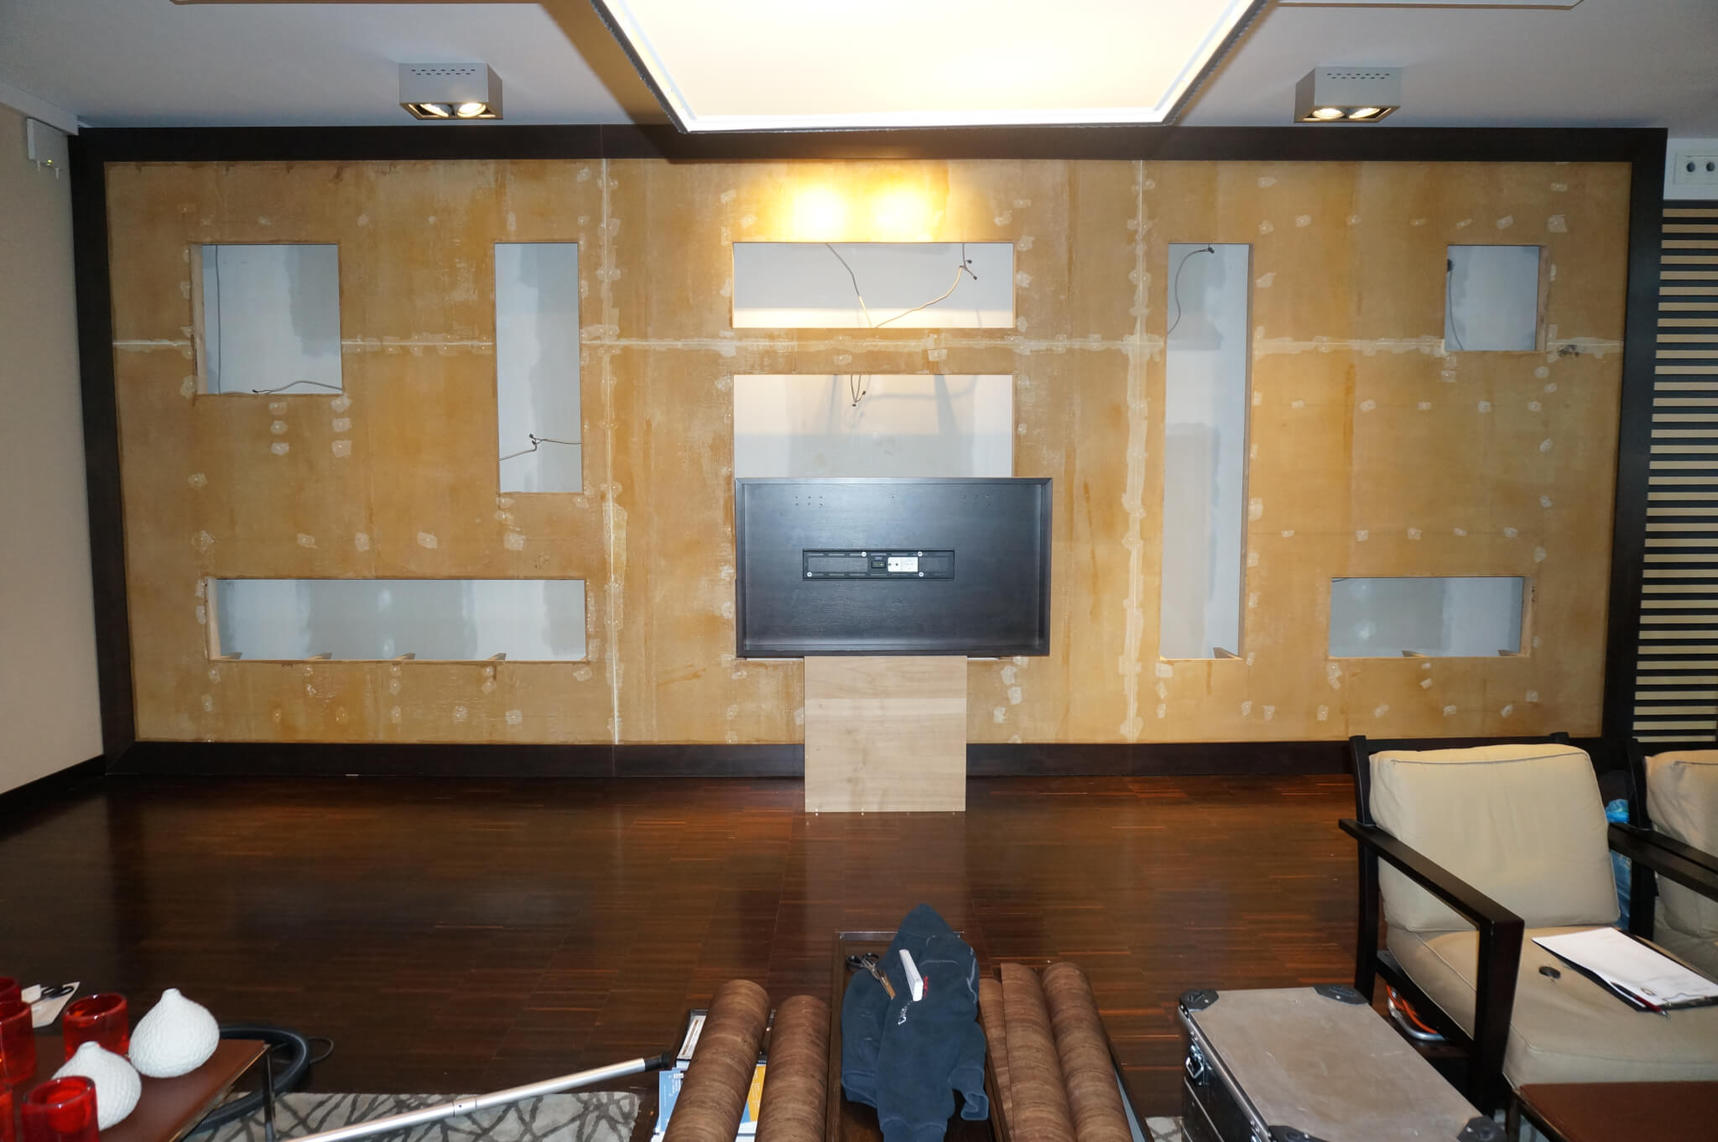 resimdo folie Hotel Lobby wand holz W671 Rustic Indoor Plank beispiel